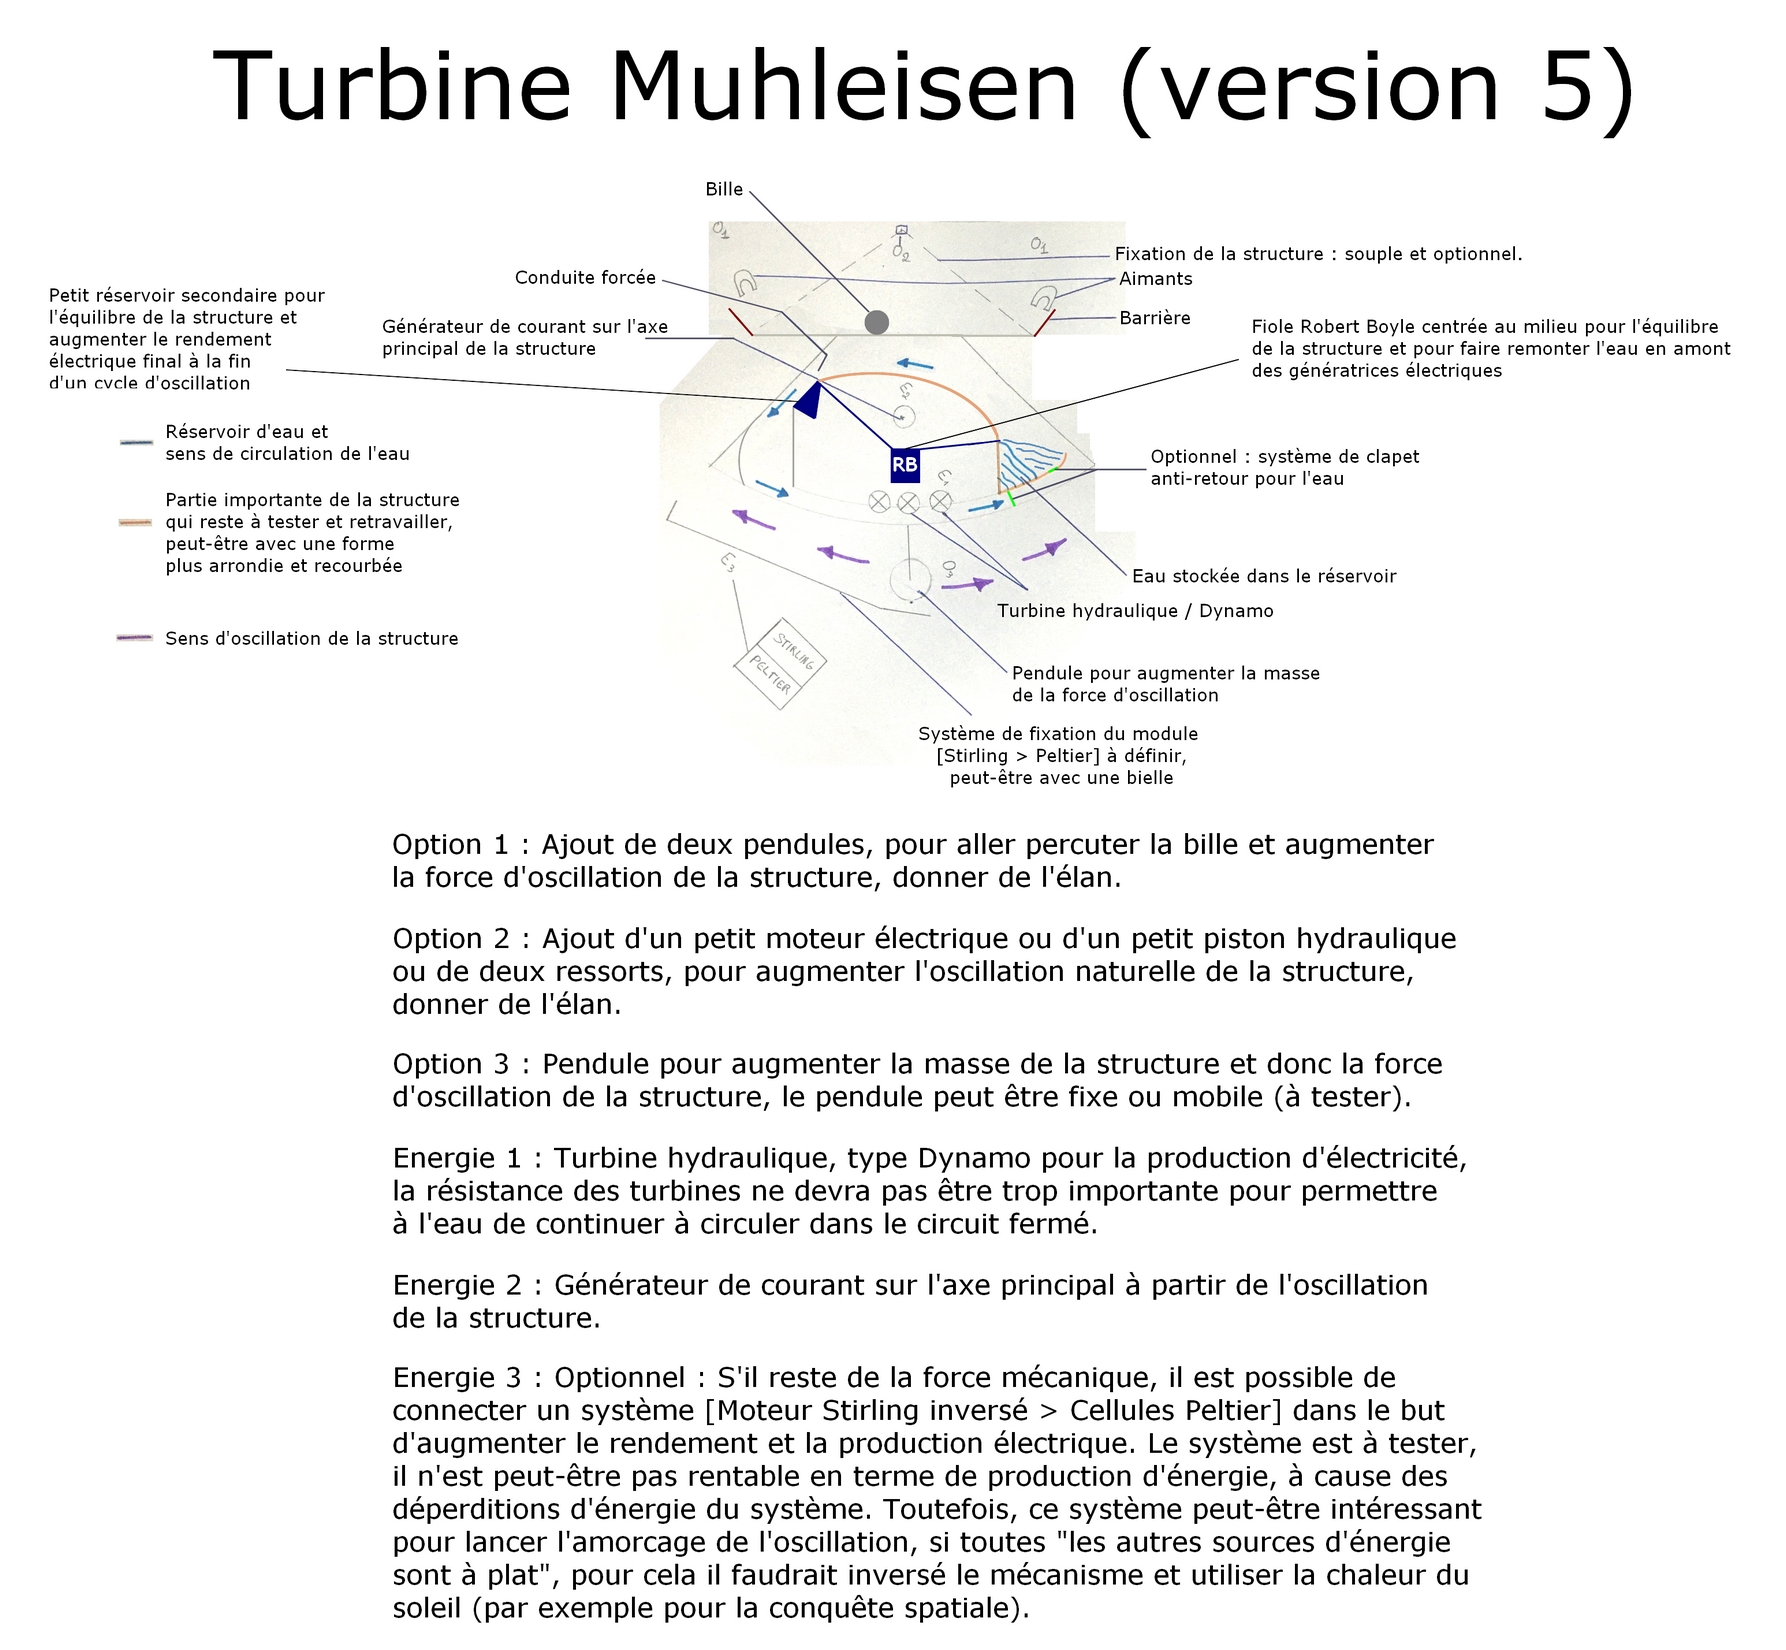 La Turbine Muhleisen 5eme version